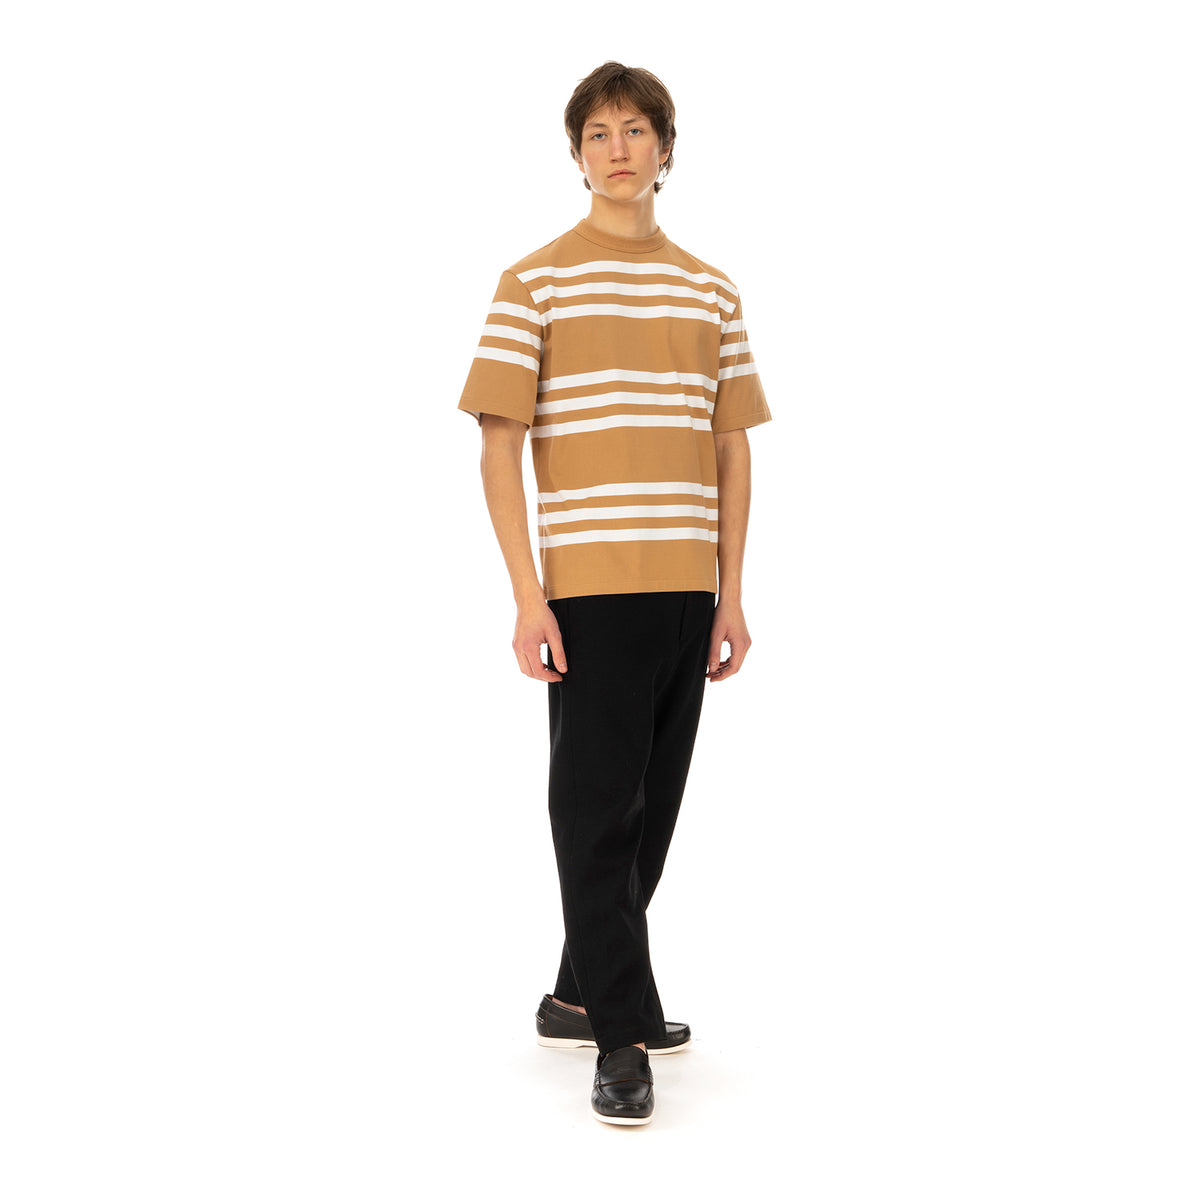 Haversack | Stripe T-Shirt 812004-31 Beige - Concrete